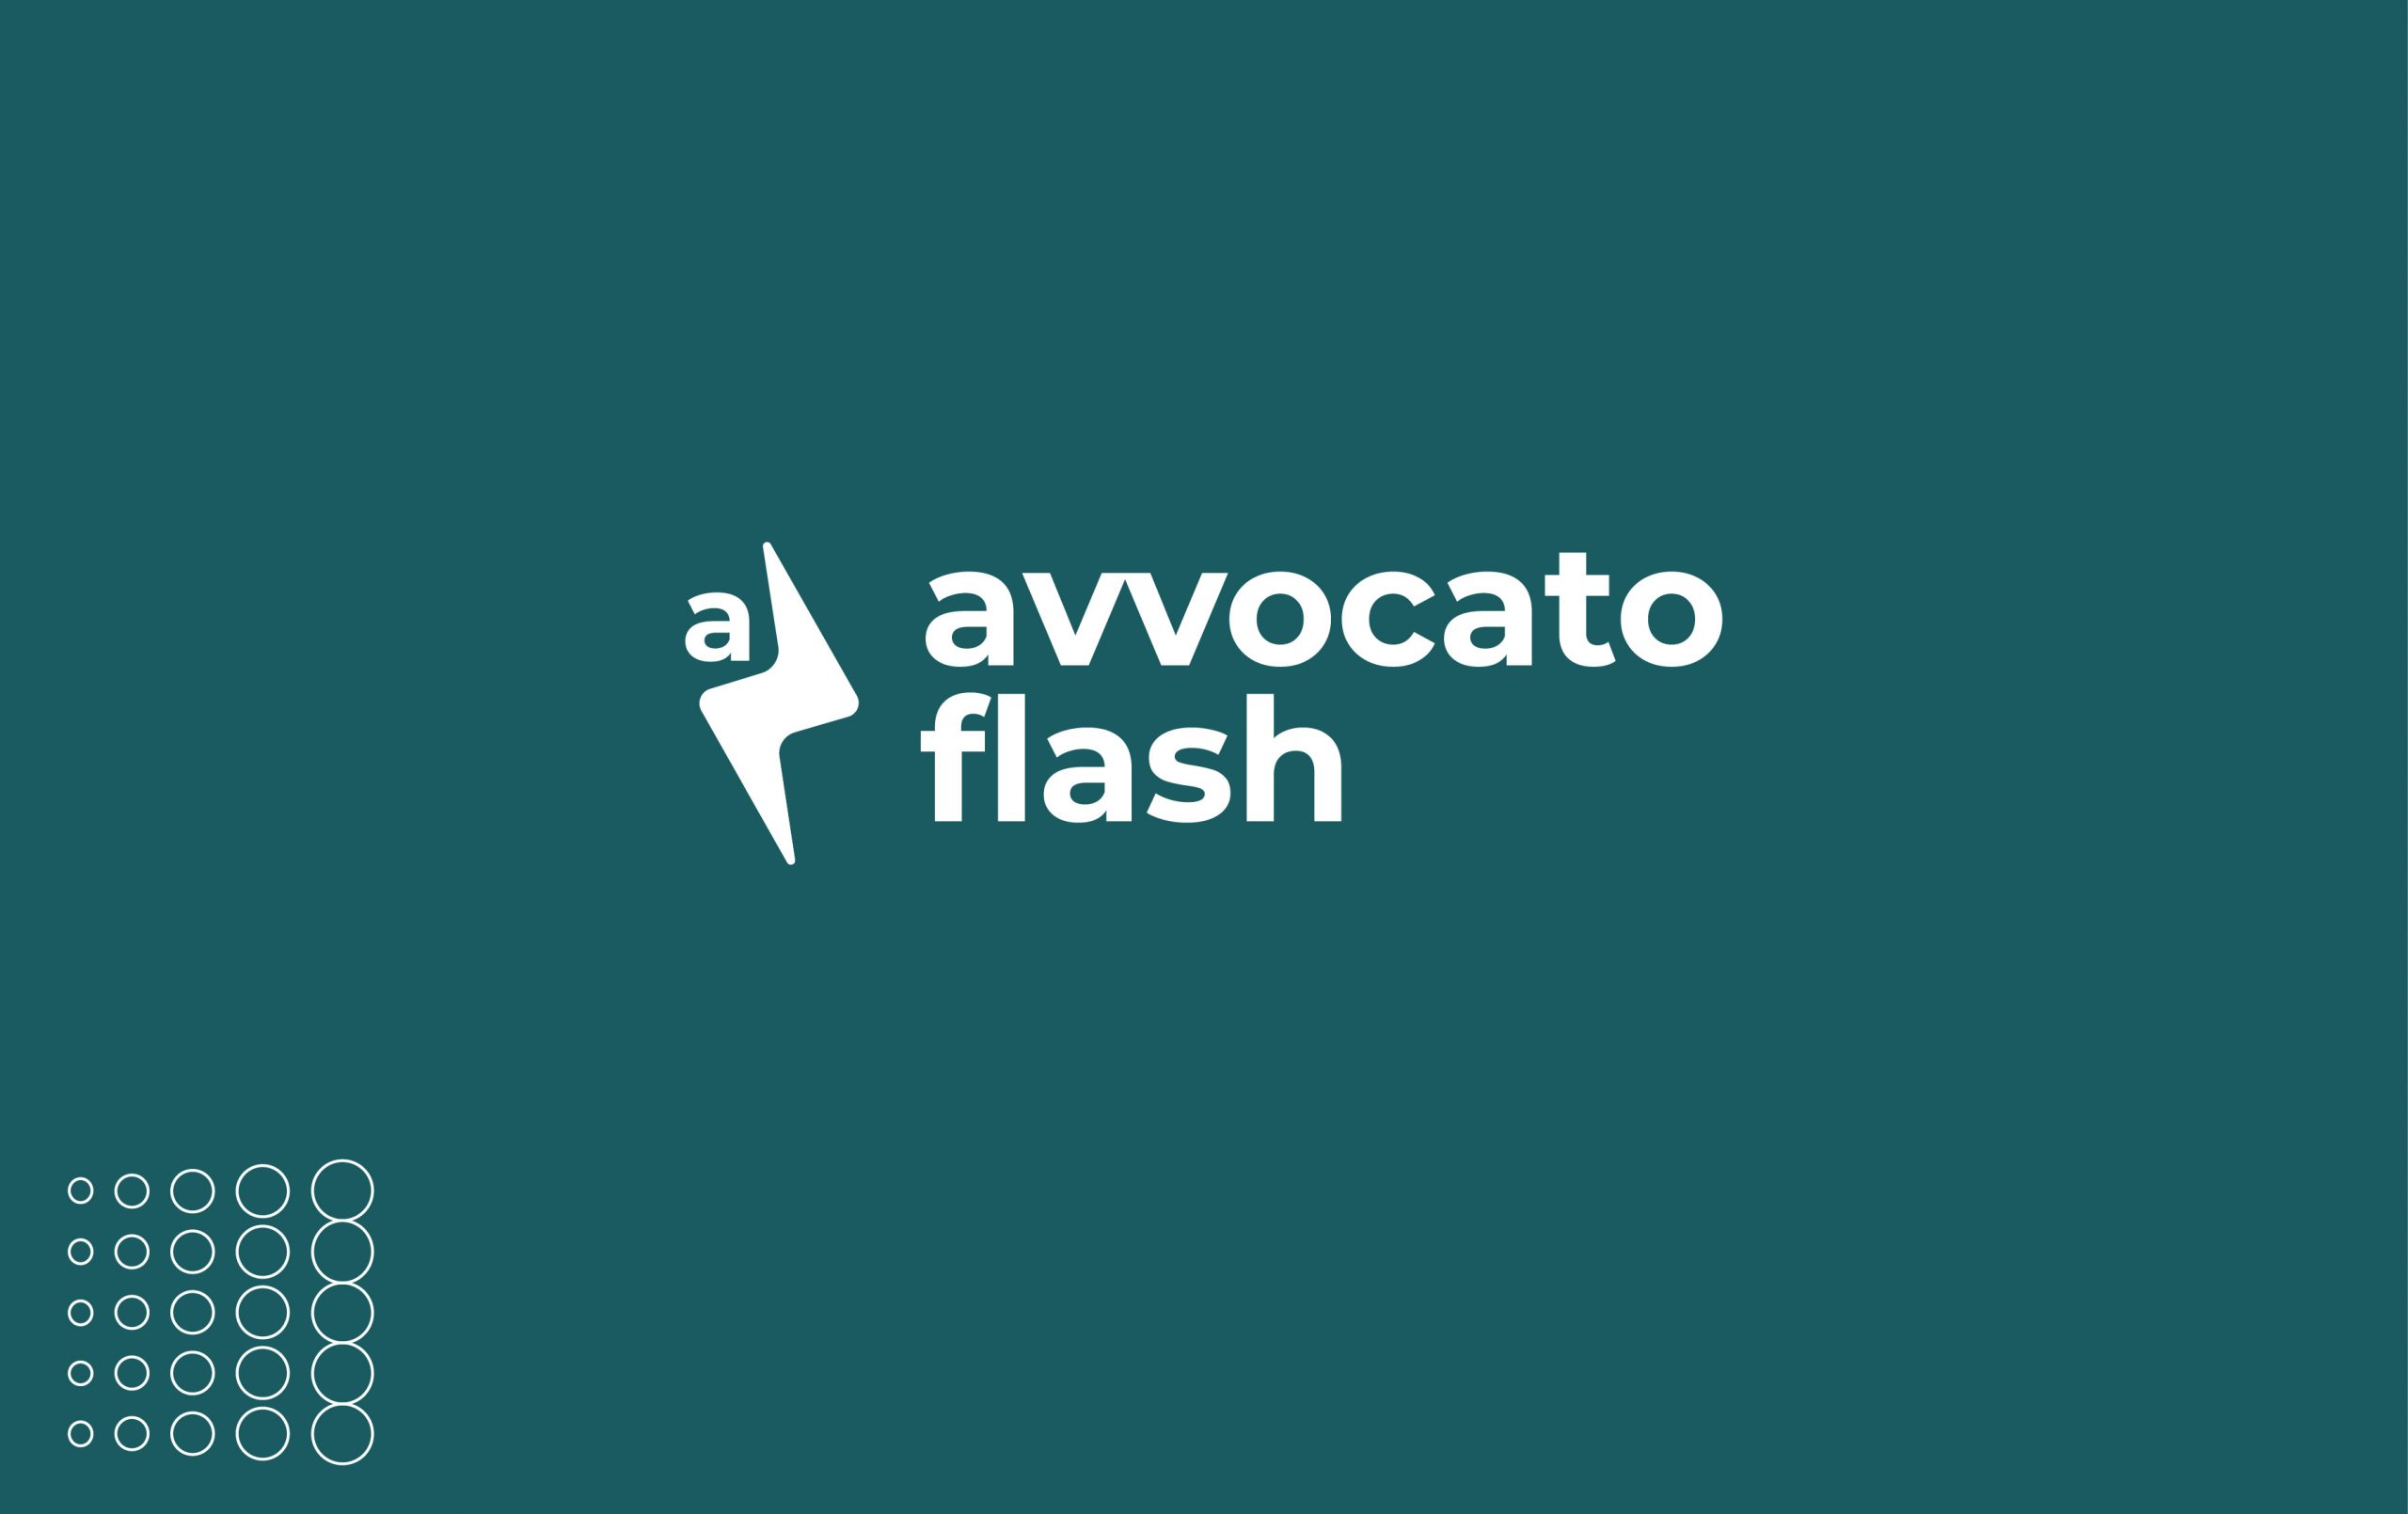 AvvocatoFlash scored a €594K investment round